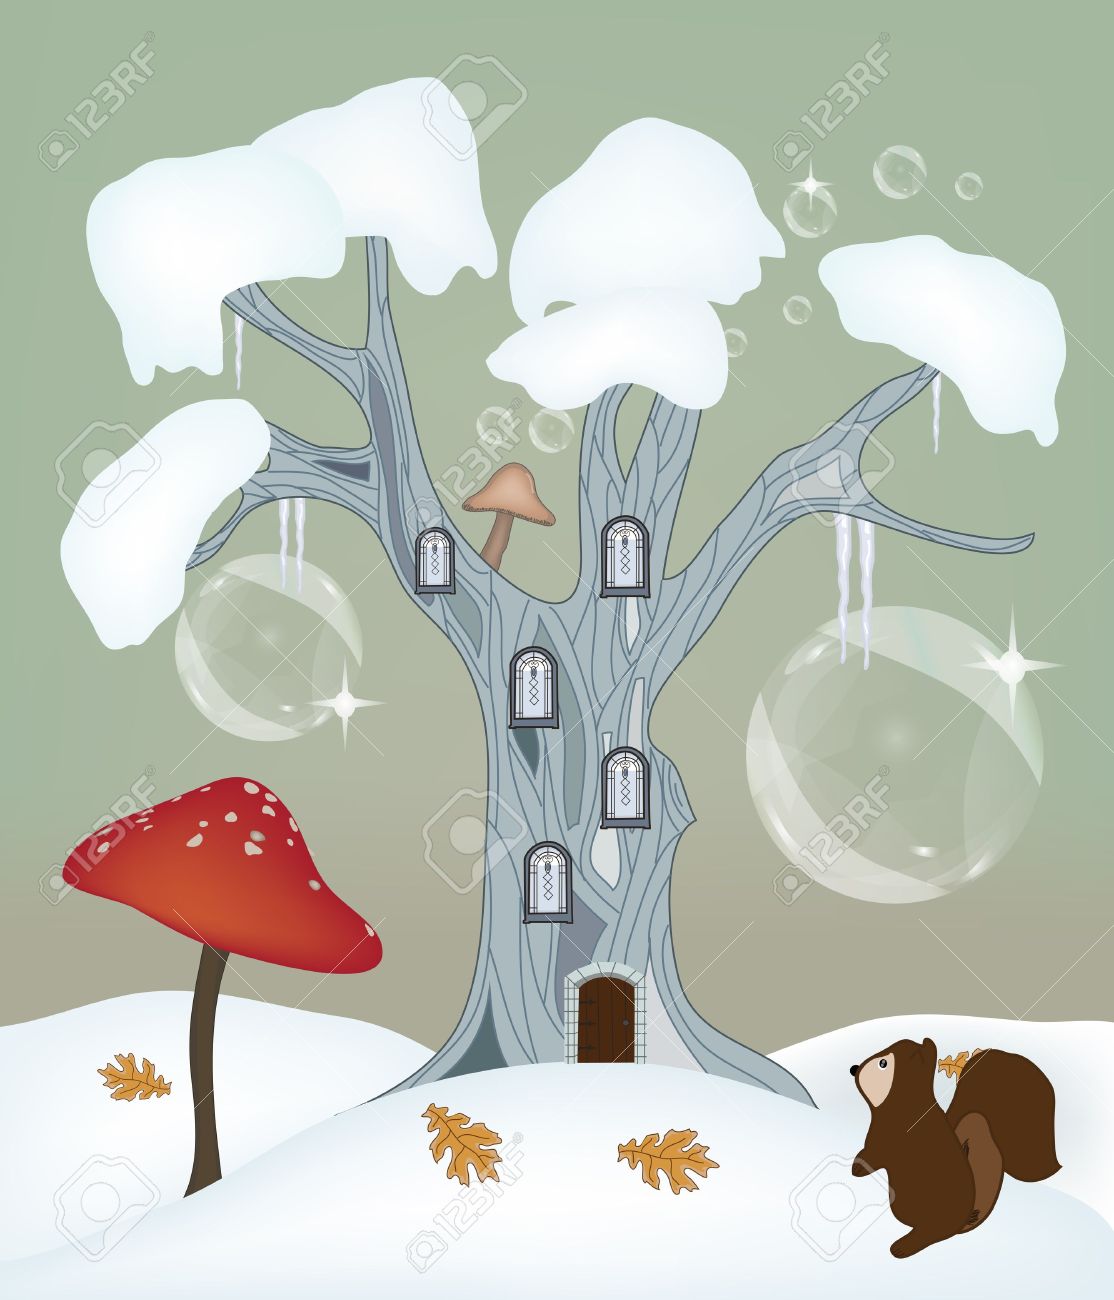 355 Winter Mushrooms Stock Vector Illustration And Royalty Free.